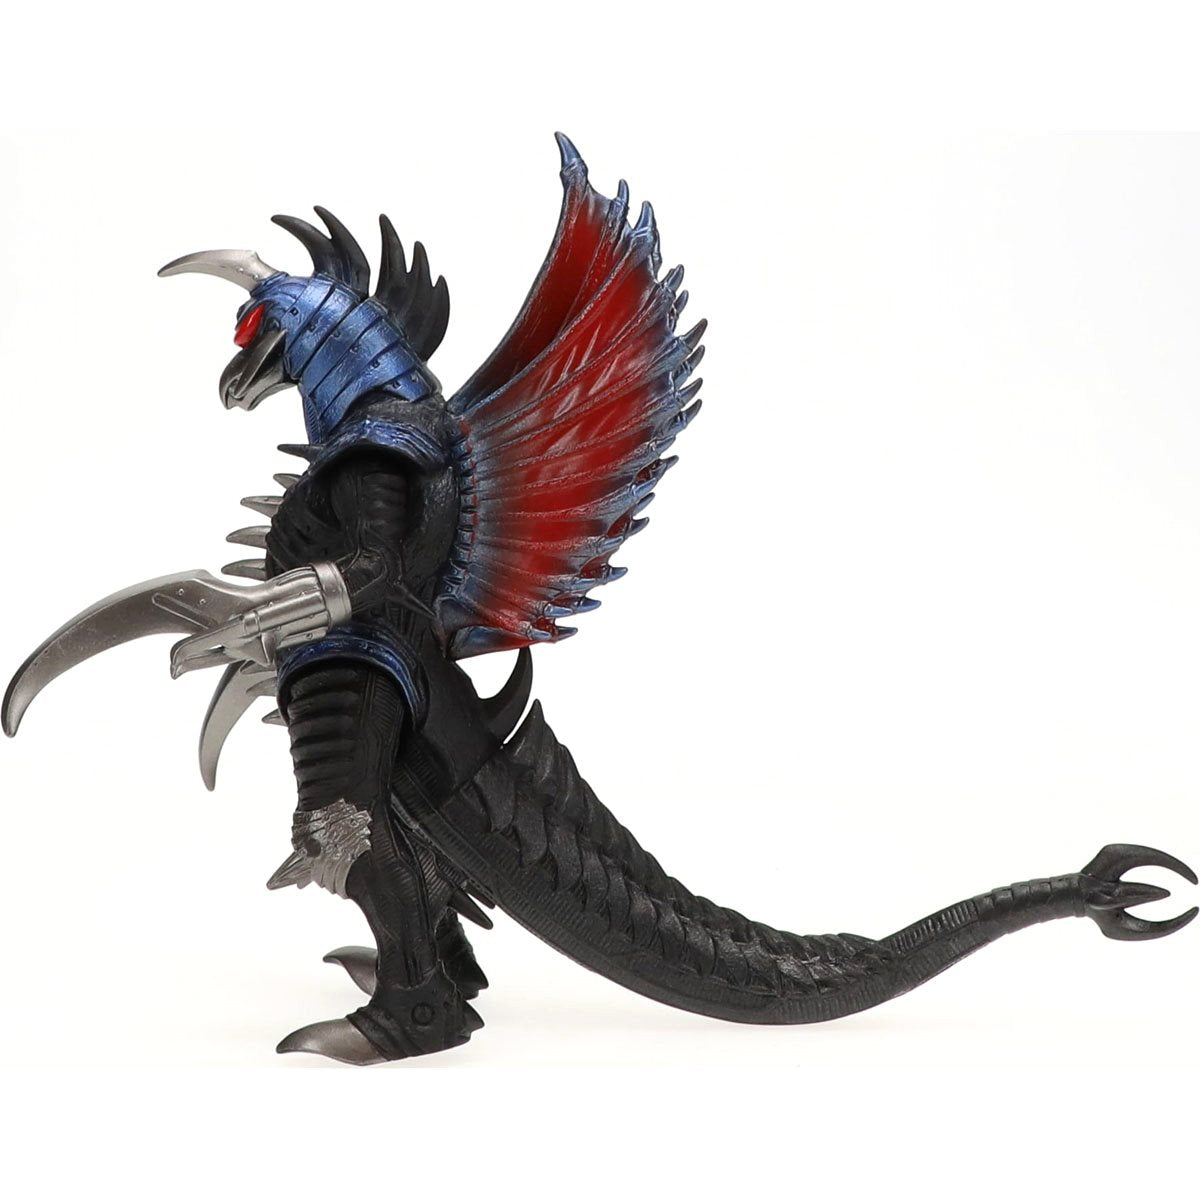 Bandai Movie Monster Series: Godzilla Final Wars 2004 - Godzilla Gigan Figura De Accion